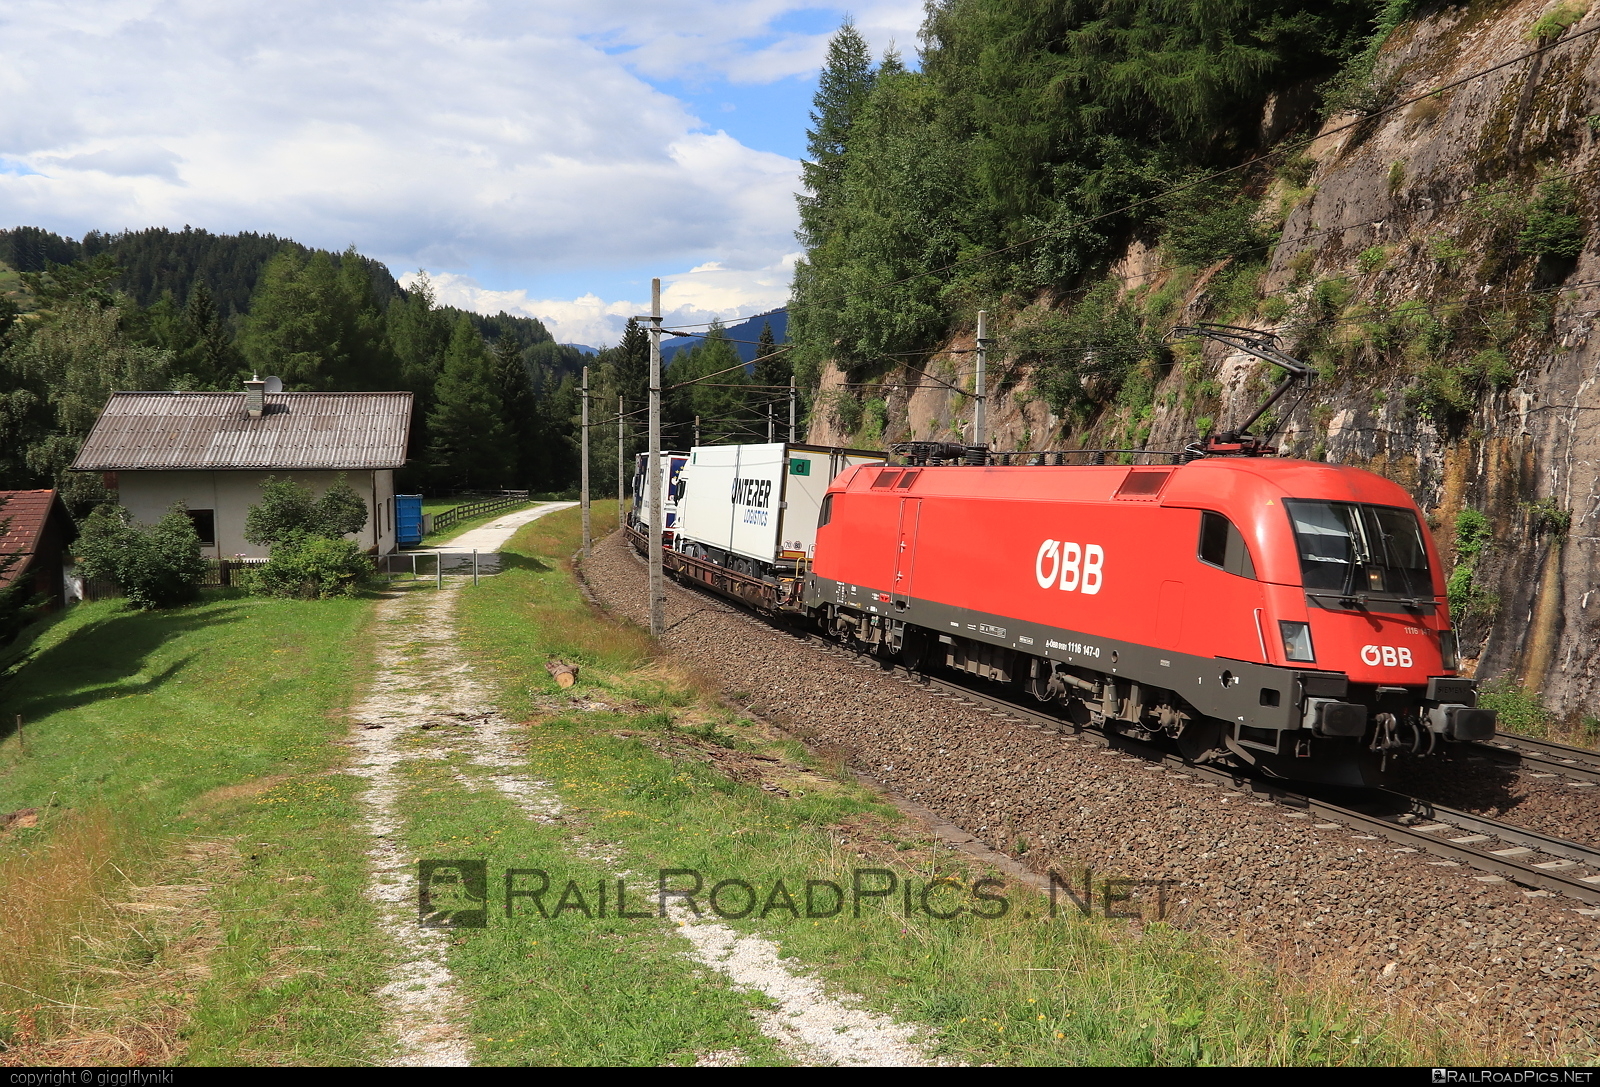 Siemens ES 64 U2 - 1116 147 operated by Rail Cargo Austria AG #es64 #es64u2 #eurosprinter #flatwagon #obb #osterreichischebundesbahnen #rcw #siemens #siemensEs64 #siemensEs64u2 #siemenstaurus #taurus #tauruslocomotive #truck